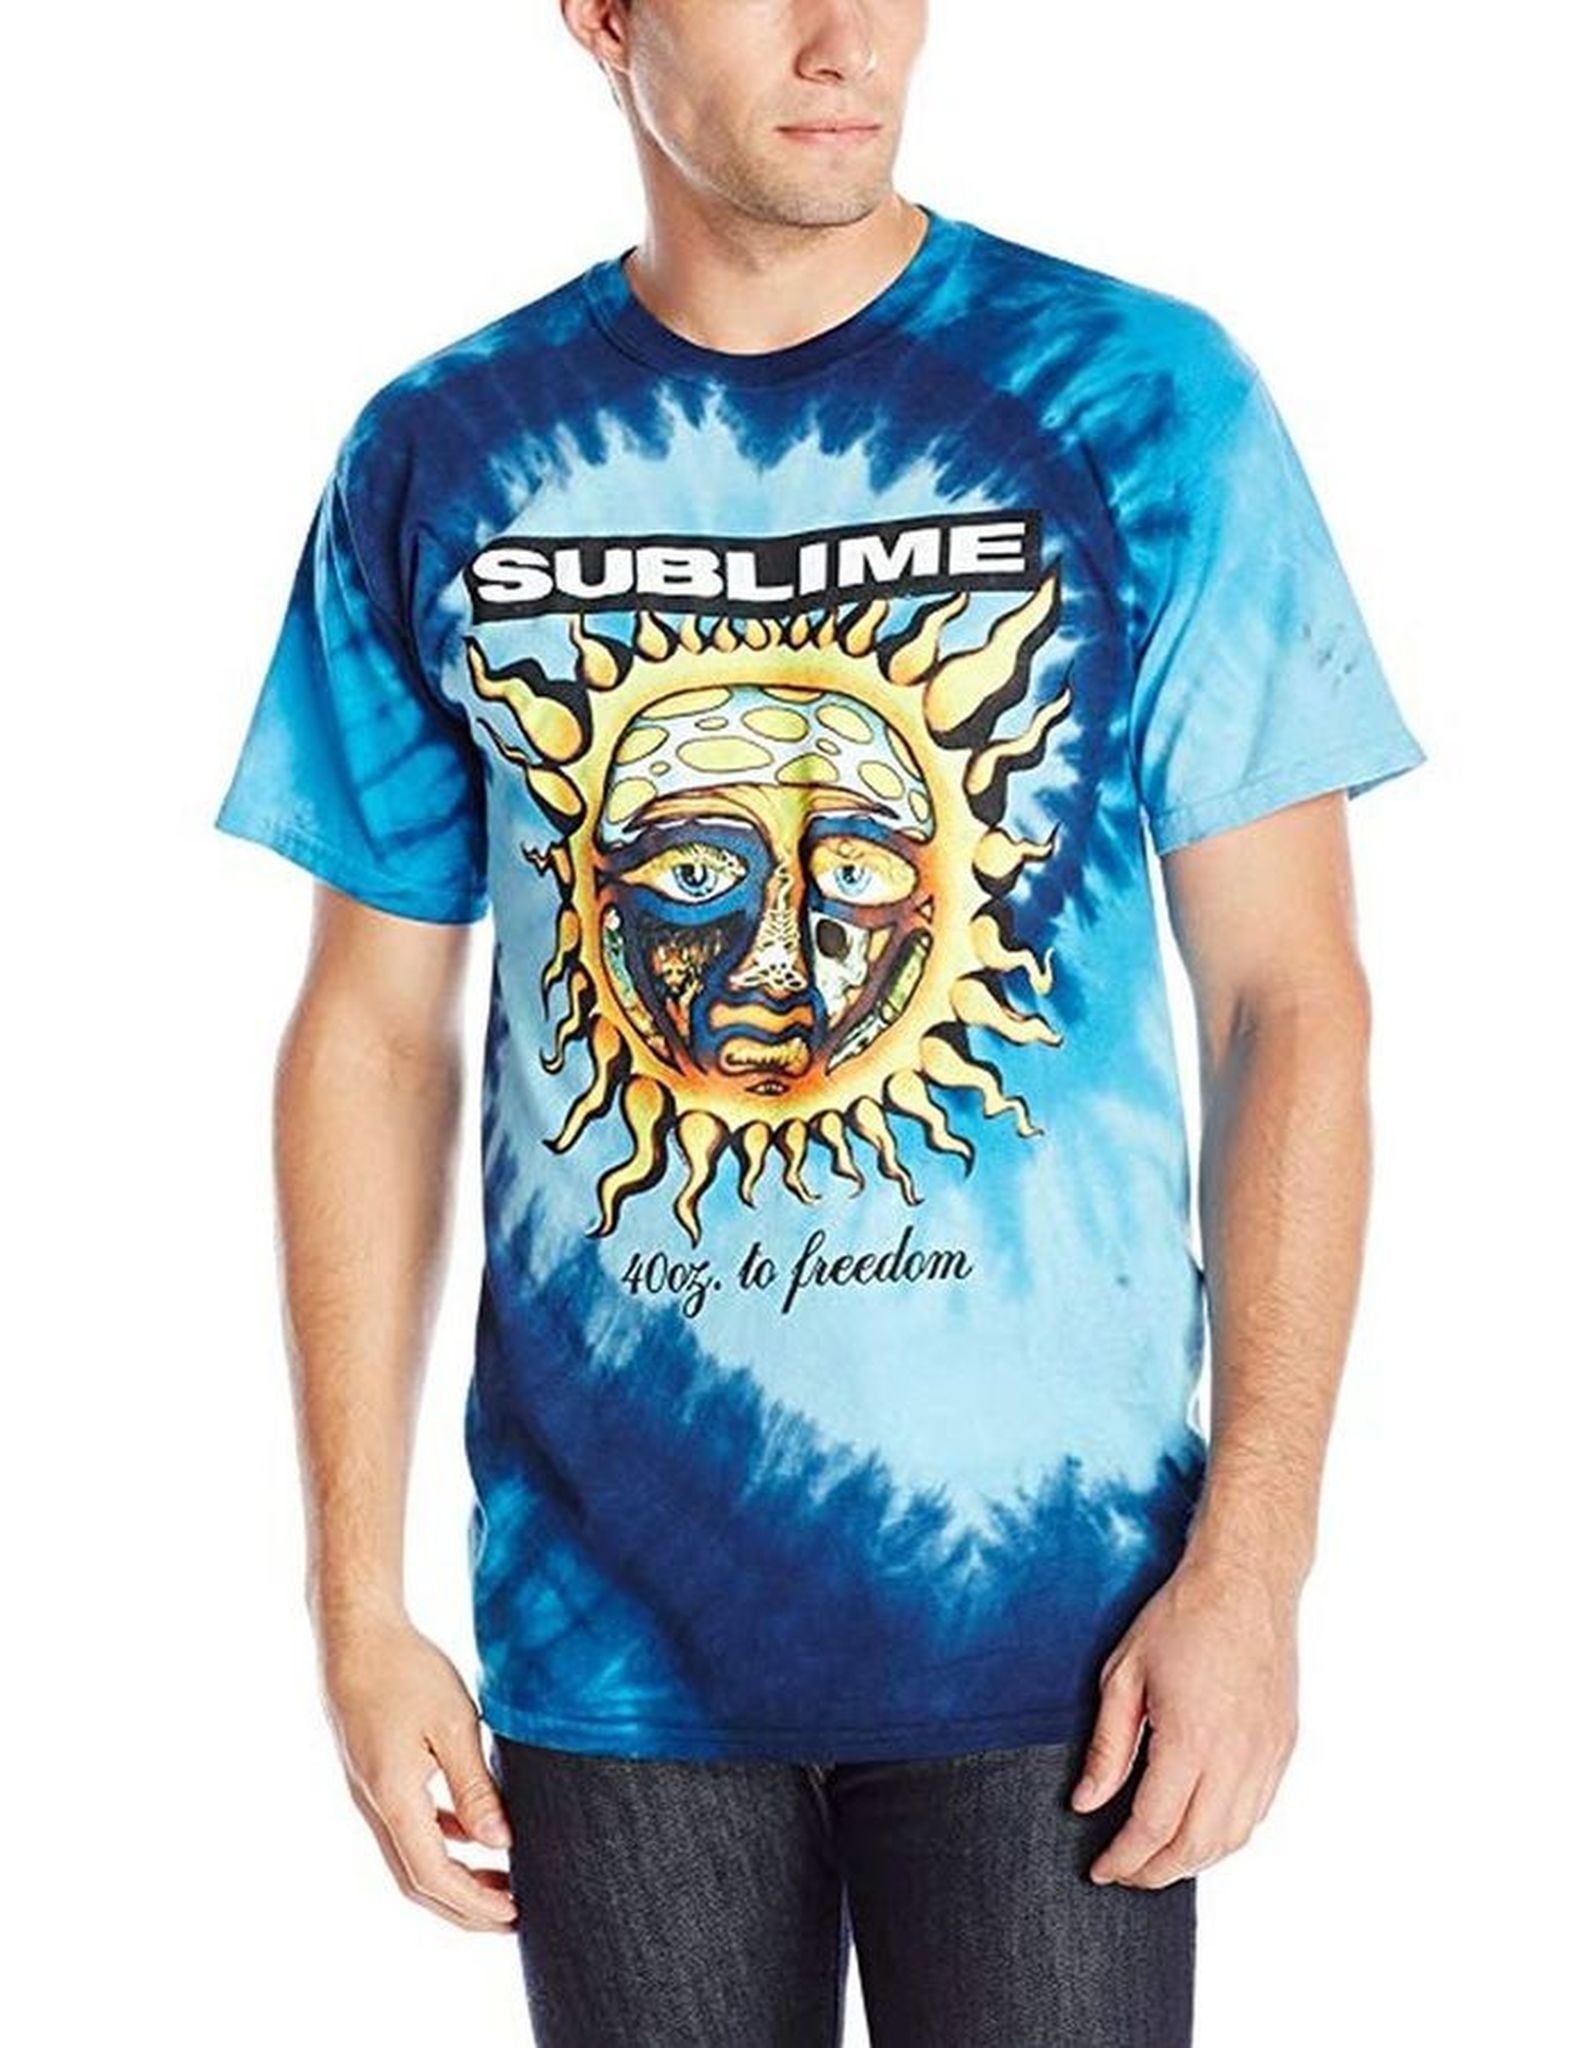 Sublime 40 Oz To Freedom Blue Tie Dye Classic T-Shirt - Walmart.com